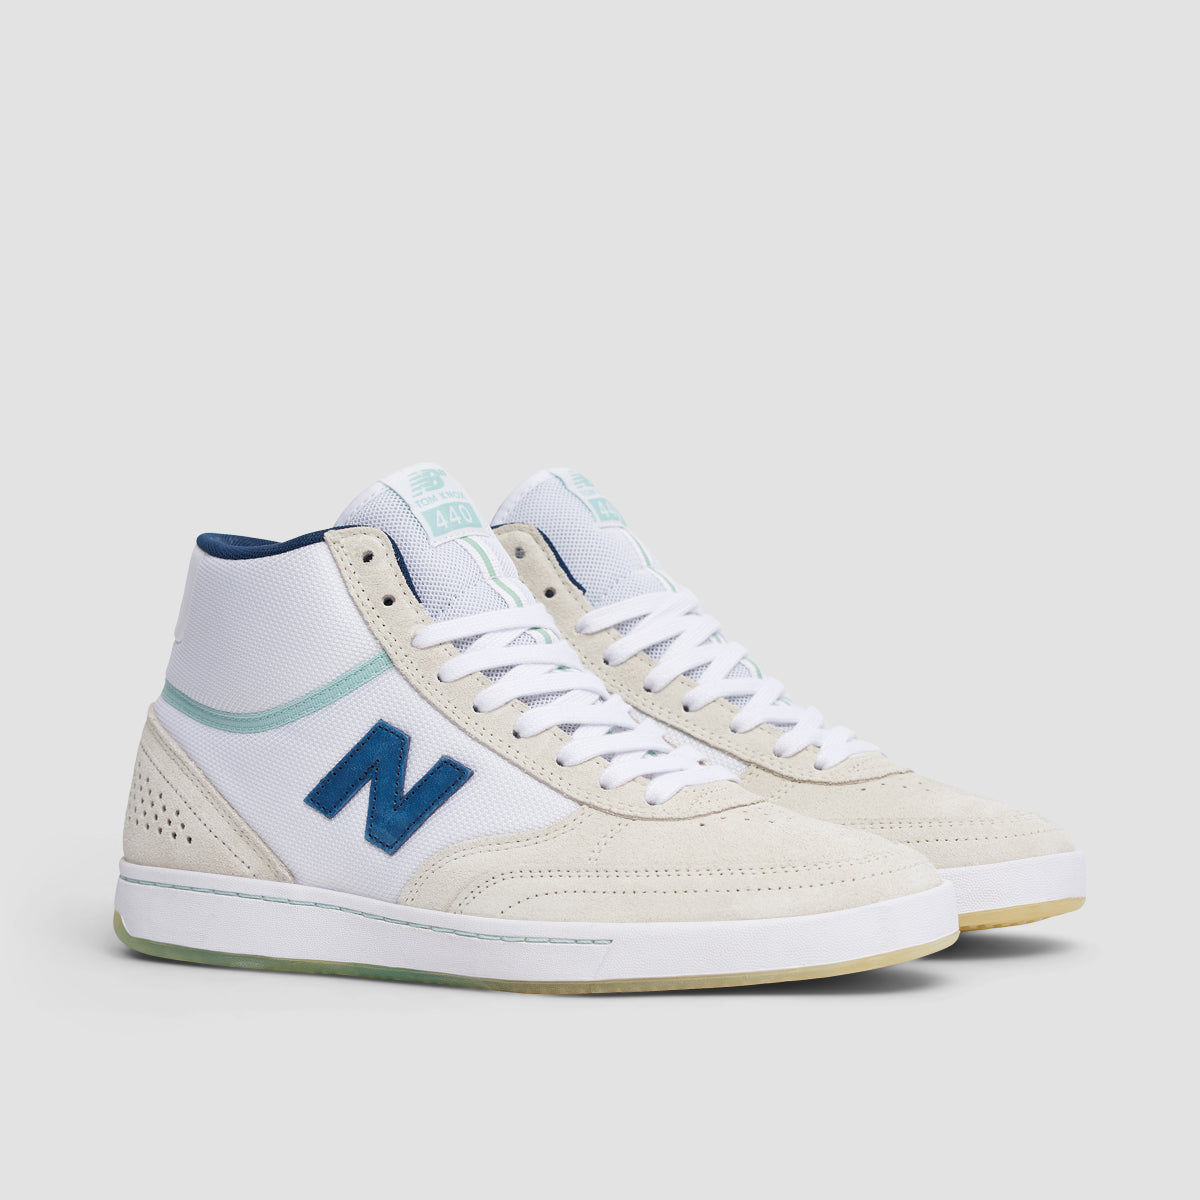 New Balance Numeric Tom Knox 440 High Shoes - White/Navy